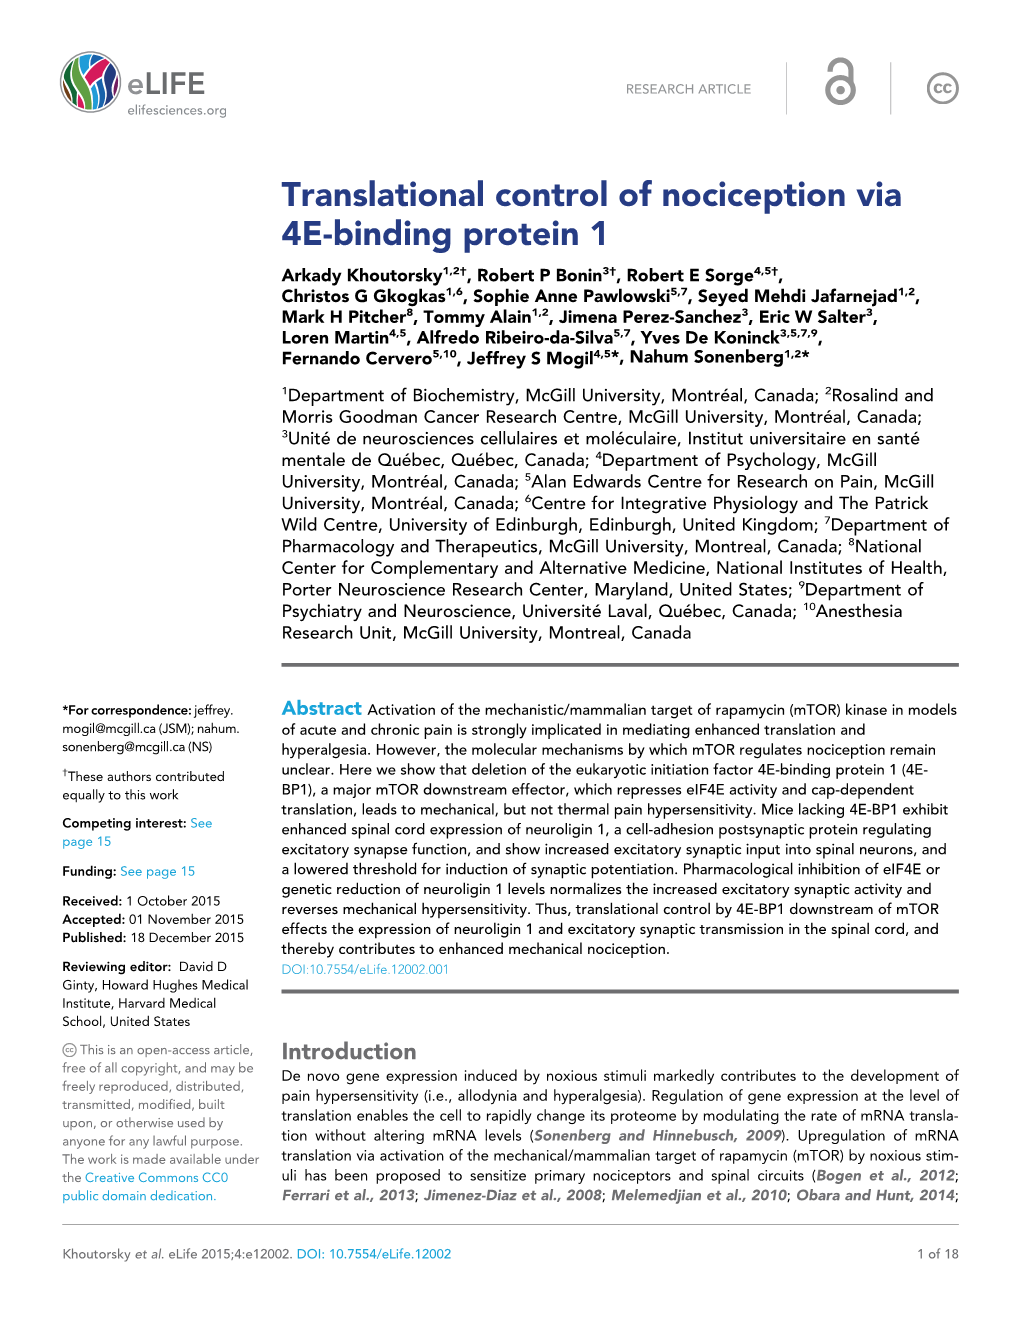 Translational Control of Nociception Via 4E-Binding Protein 1